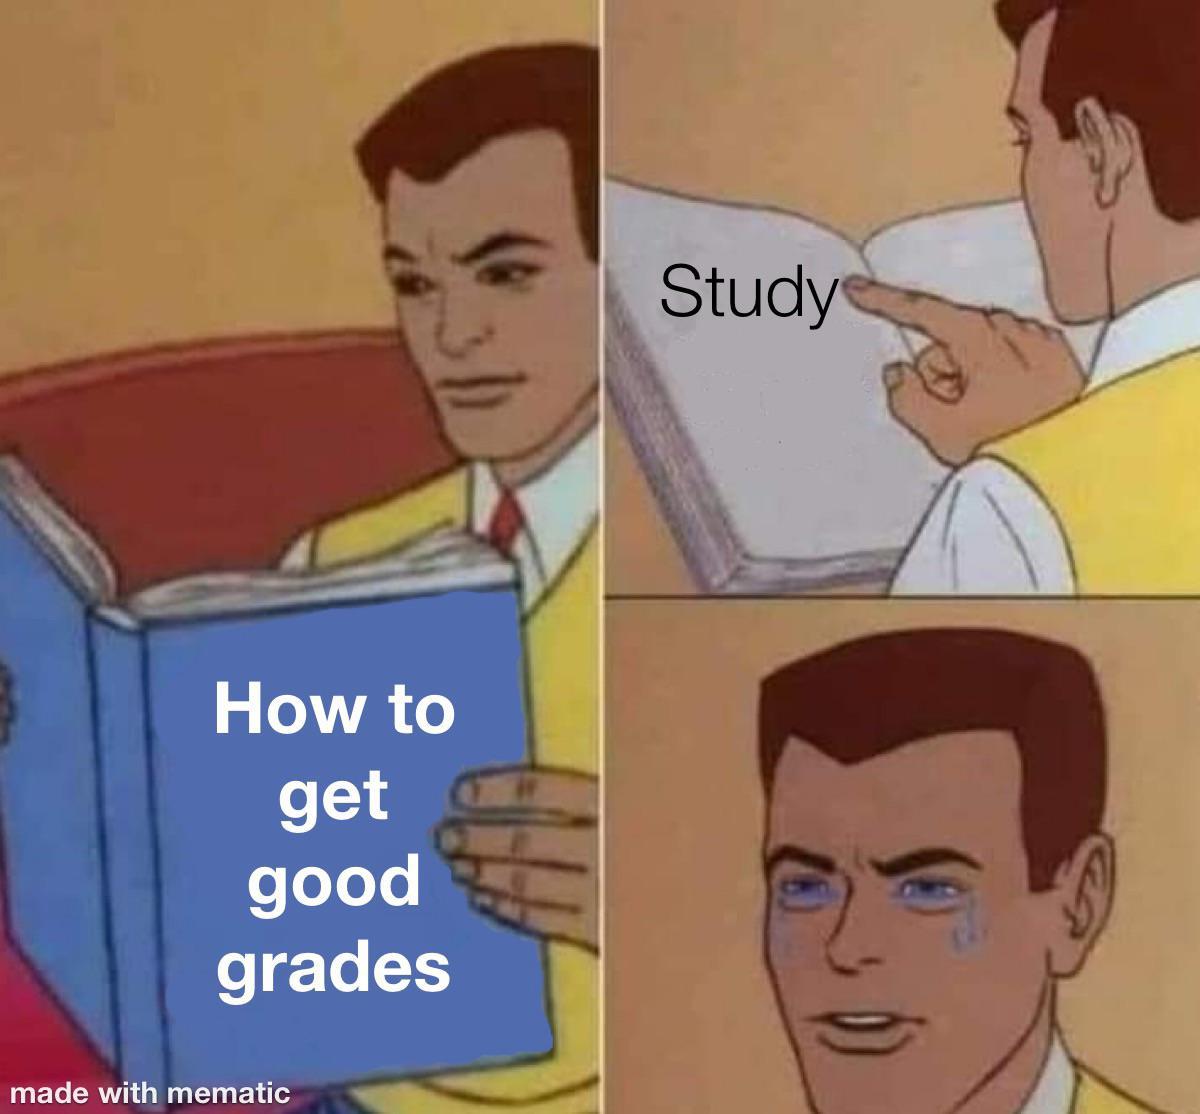 I don't wanna study : r/memes